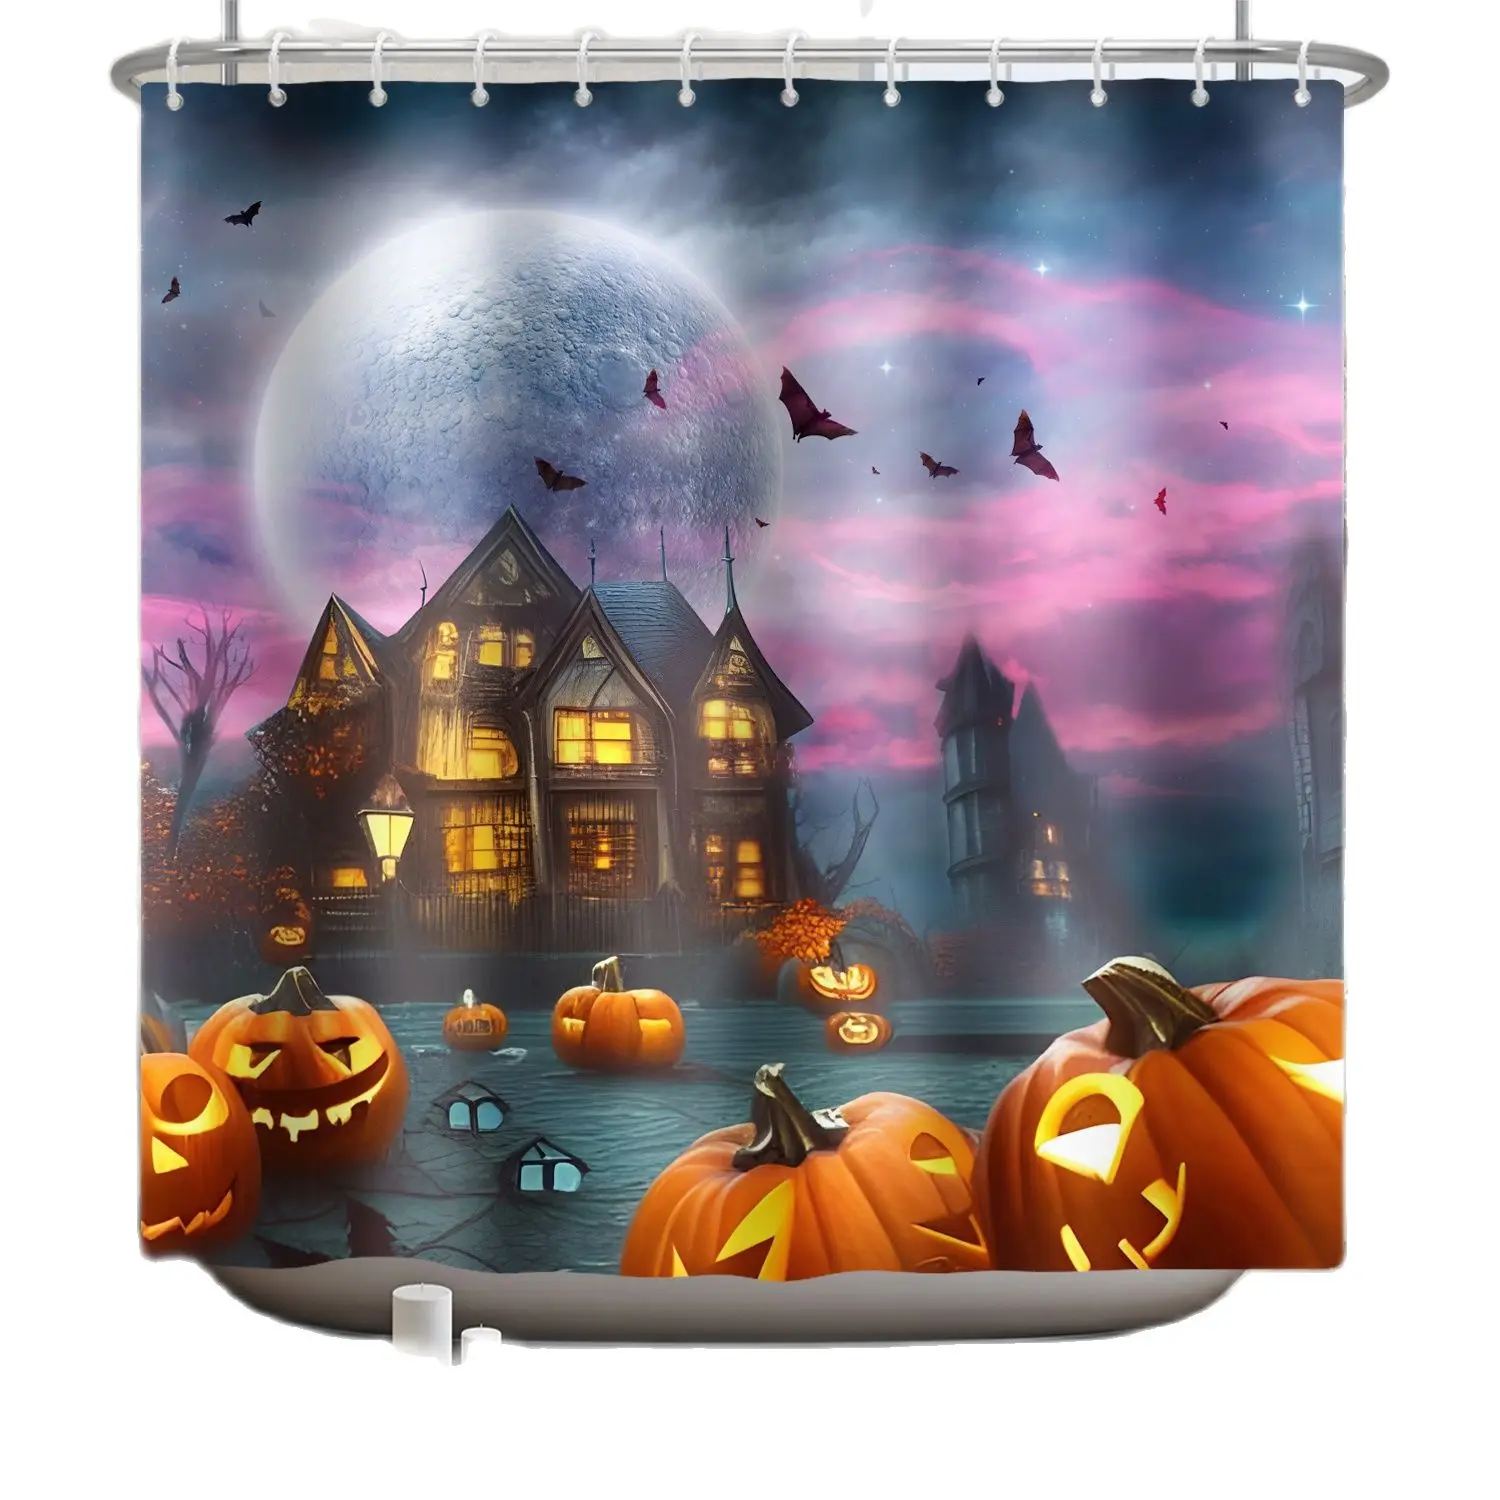 

Halloween Shower Curtain At Night Castle Witch Ghost Scary Pumpkin Bat Ghost Bathroom Decor Waterproof Fabric Bath Curtains